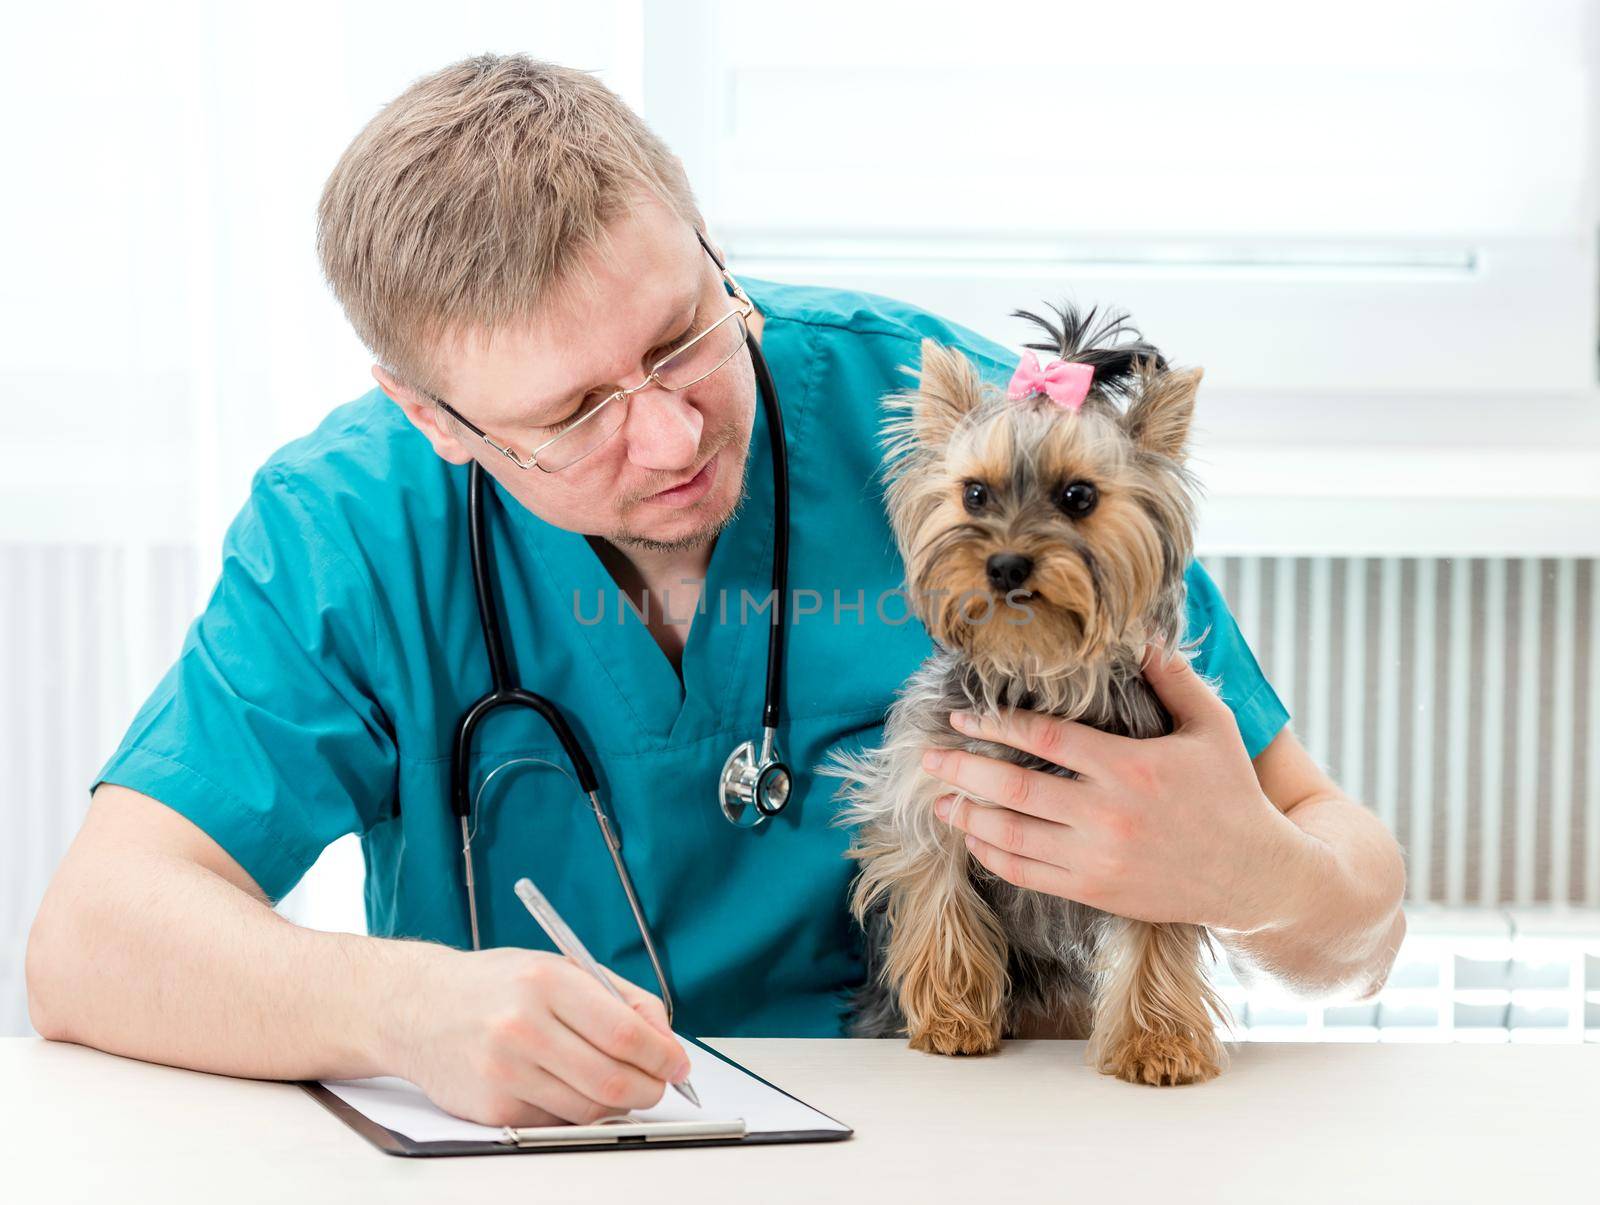 Veterinarian holding dog on hands at vet clinic by tan4ikk1